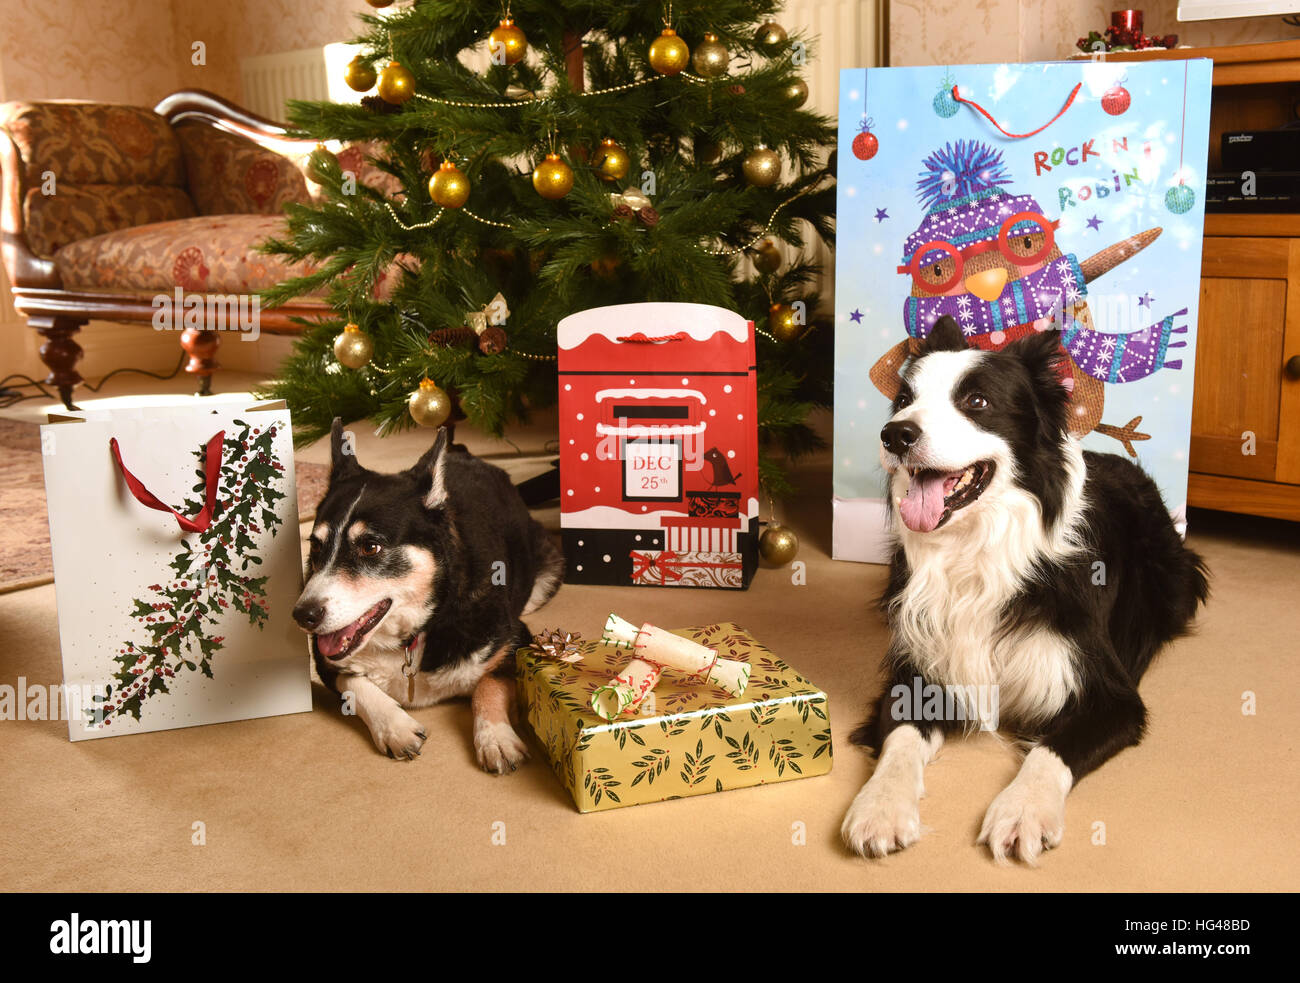 Pet dogs guarding Christmas presents under the Xmas tree Stock Photo